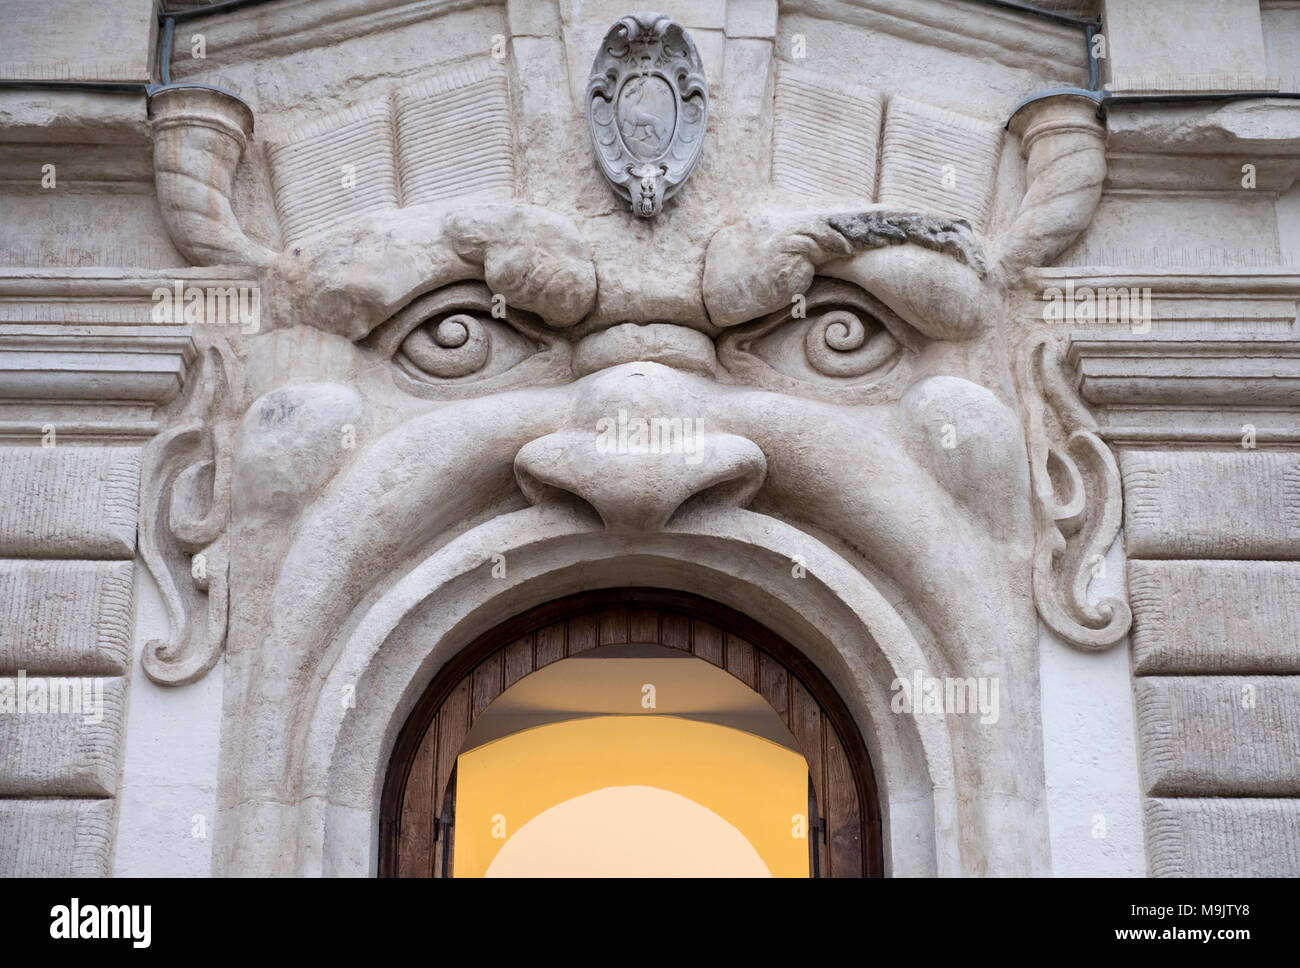 Rome Italy , Palazzetto Zuccari door entrance, via Gregoriana, Federico Zuccari, 1600 dc artist home ornamental doorway Stock Photo